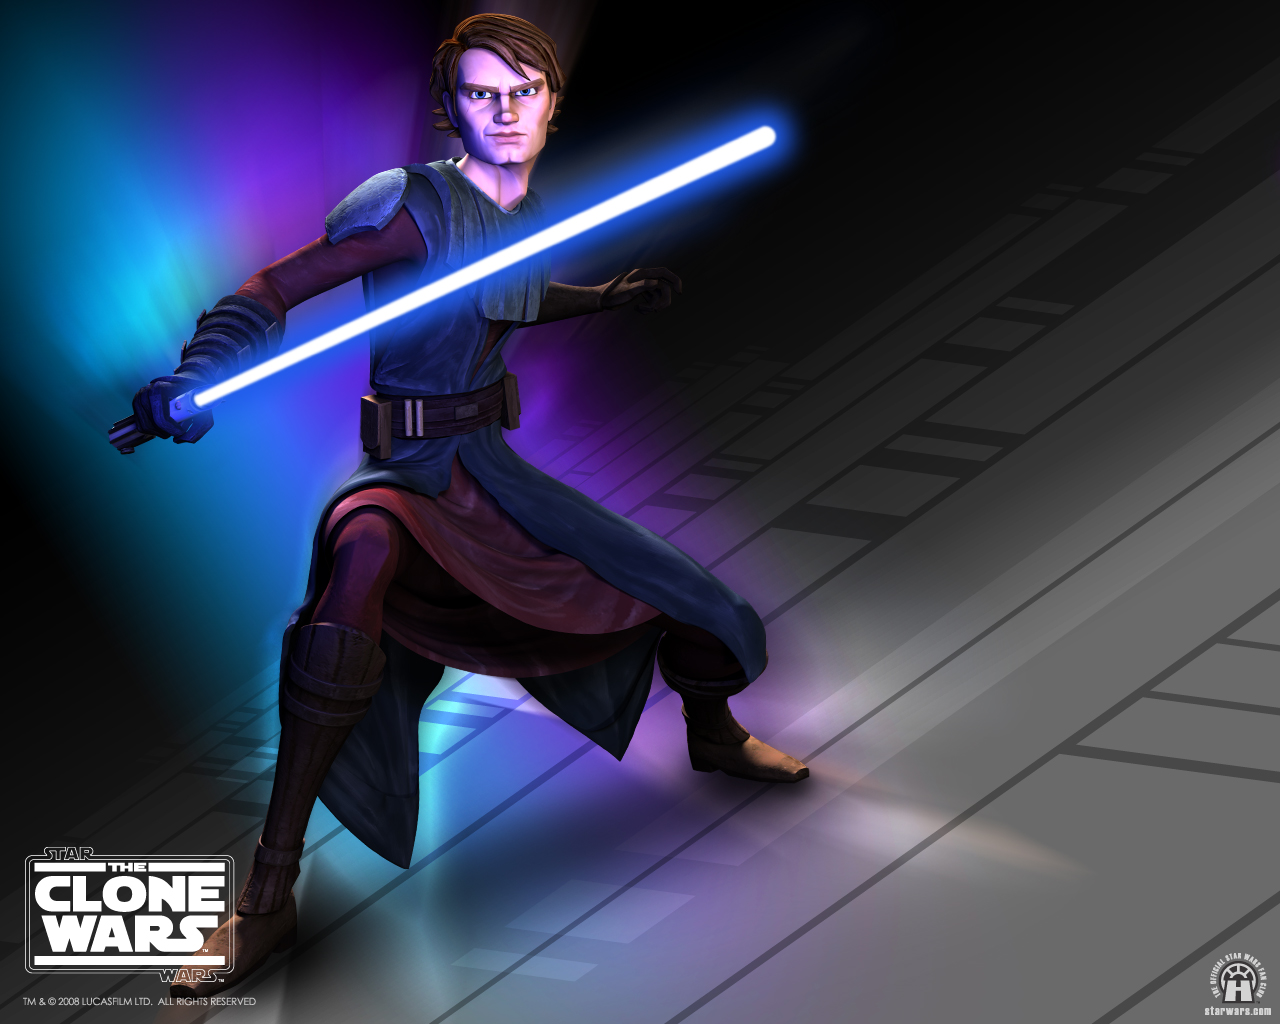 "Star Wars: The Clone Wars" desktop wallpaper (1280 x 1024 pixels)